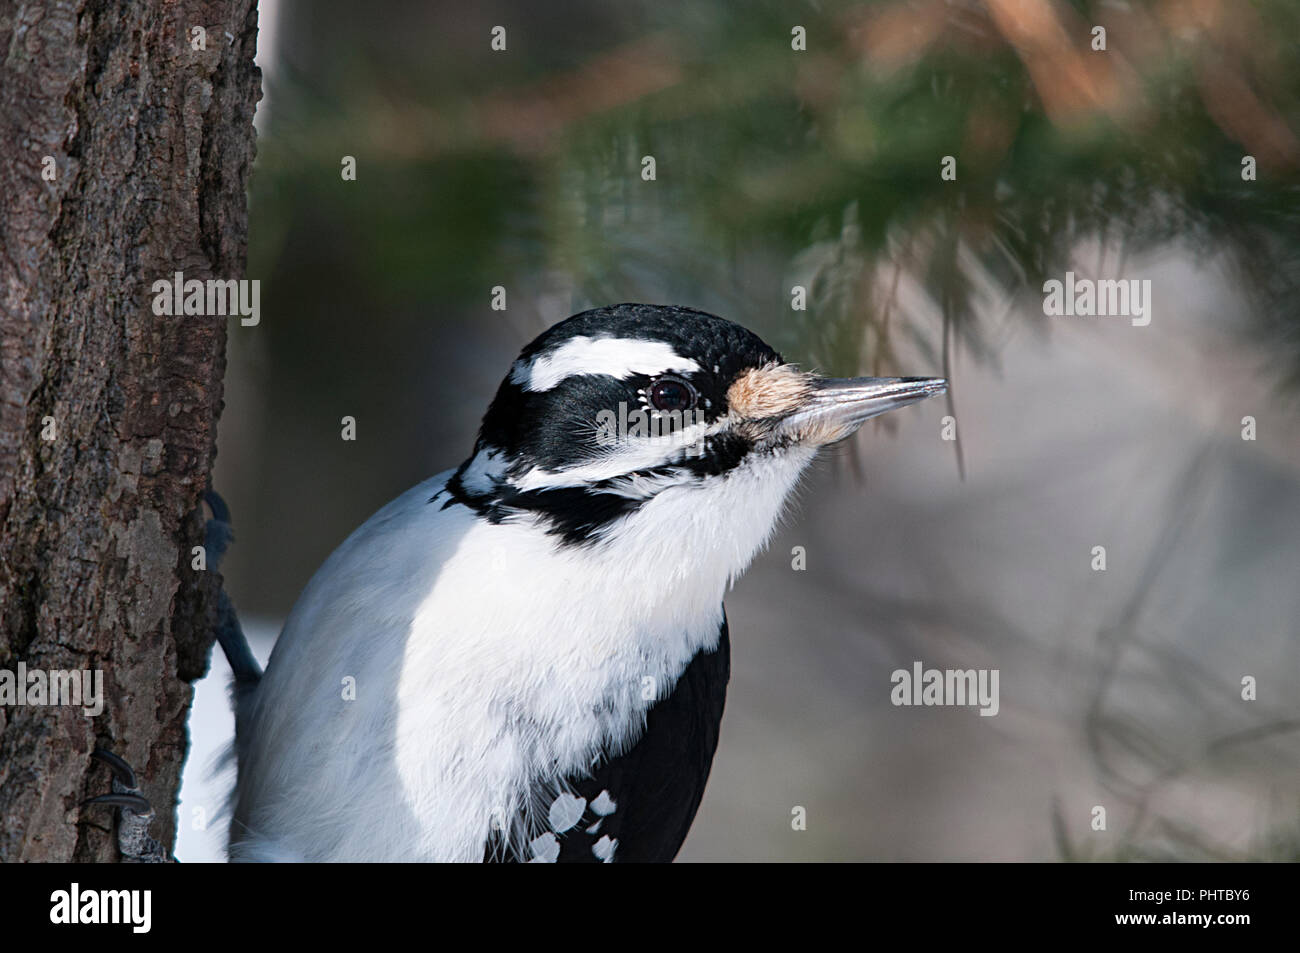 Woodpecker bird enjoying its environment. Stock Photo